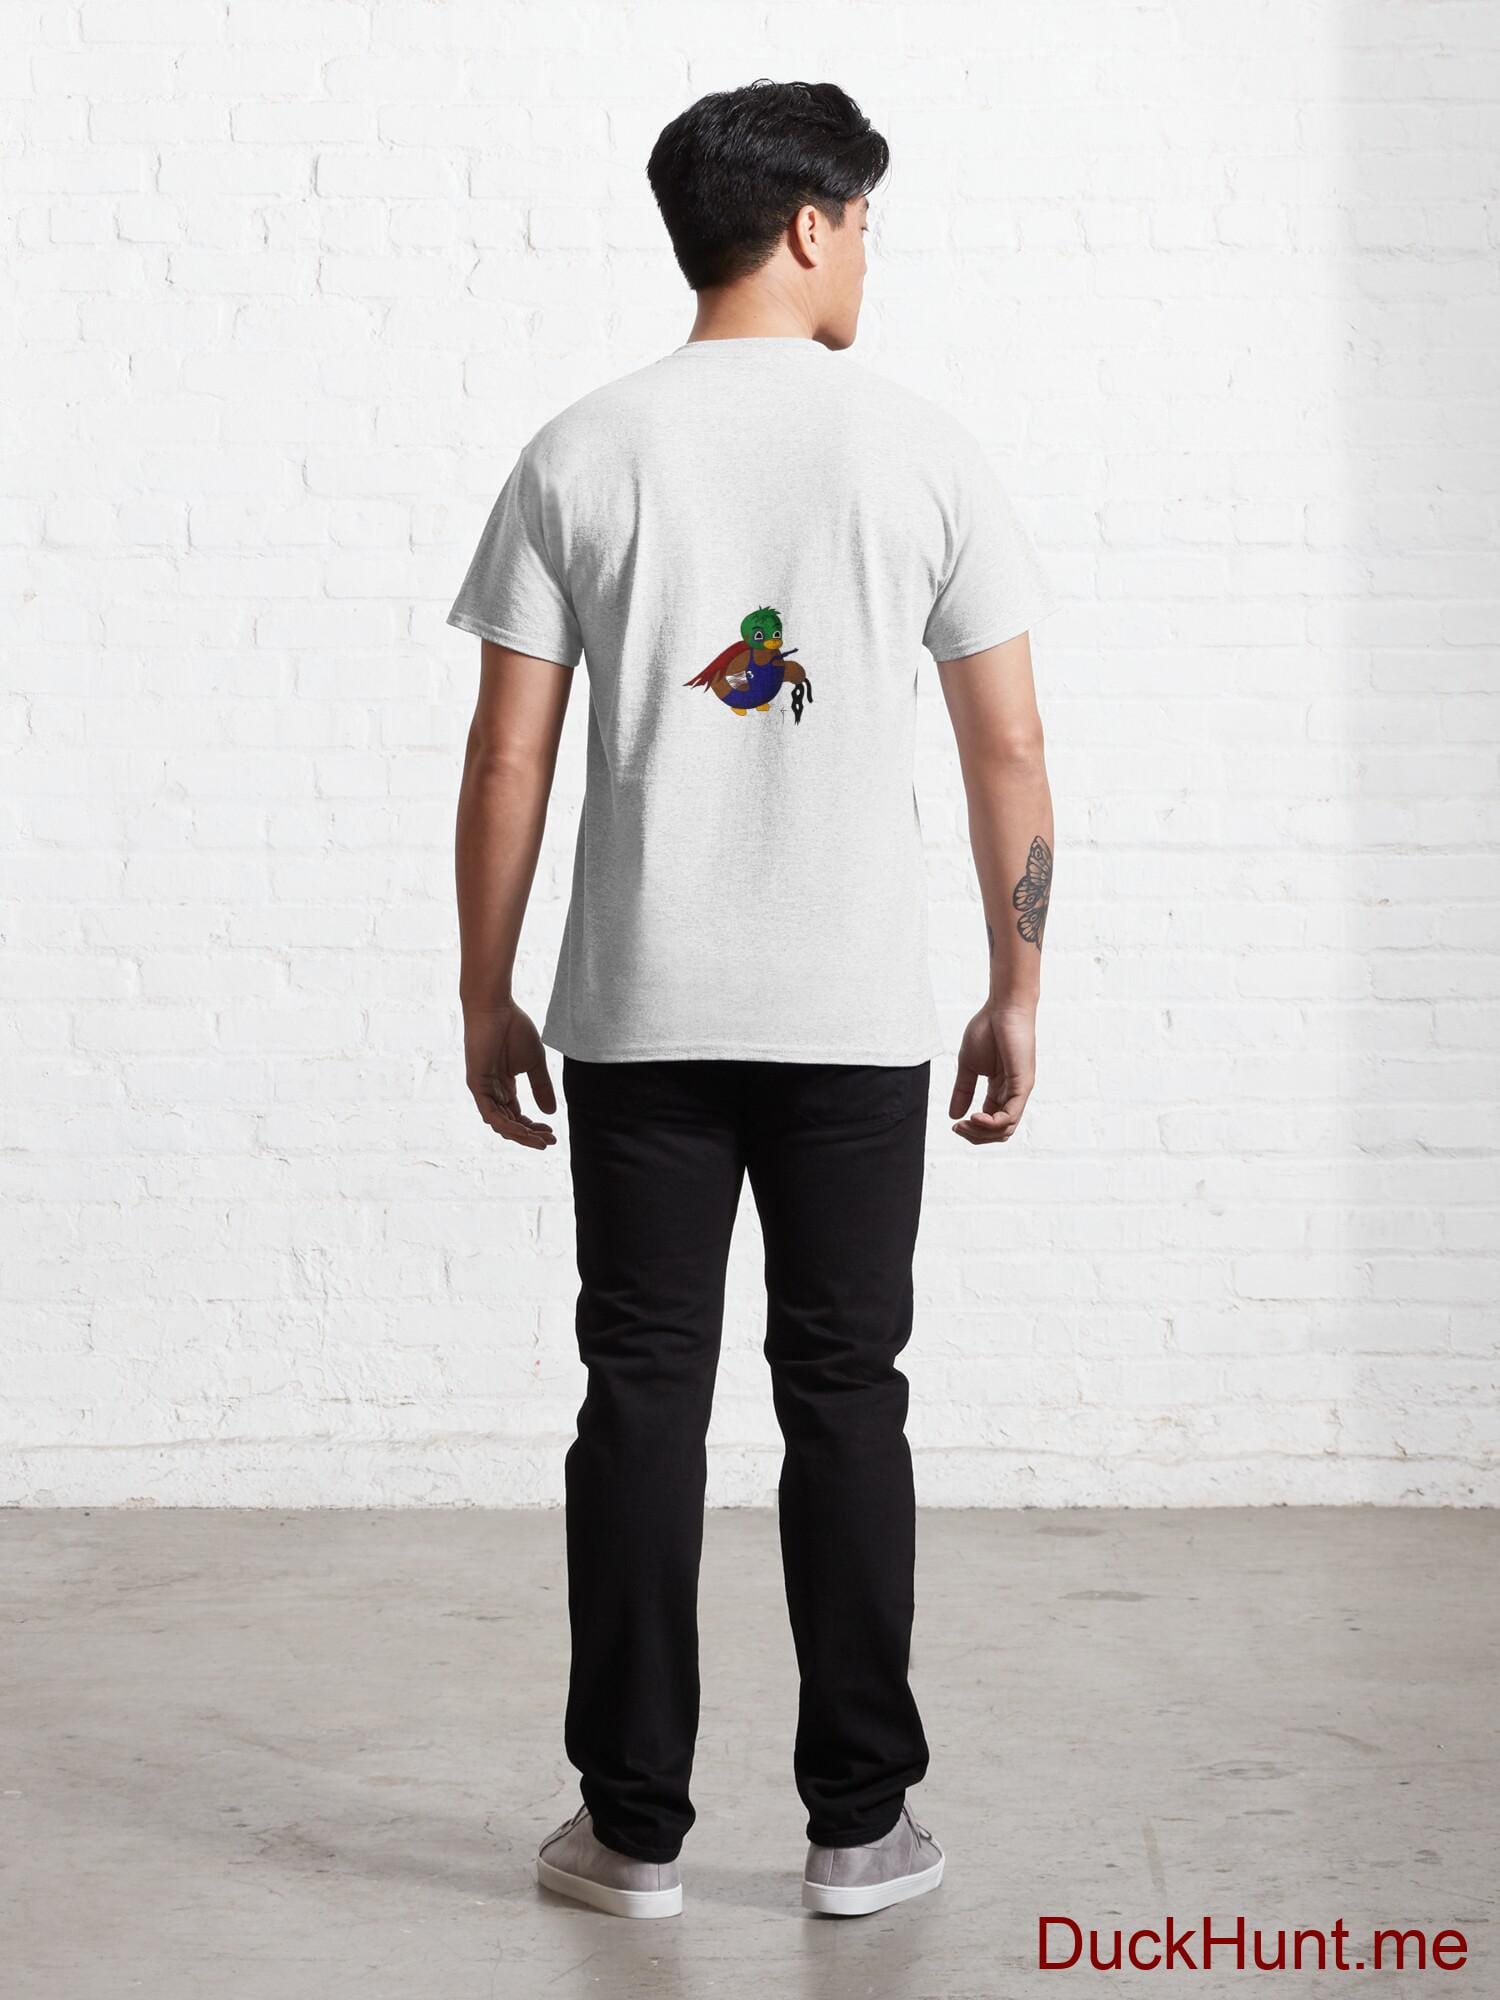 Dead DuckHunt Boss (smokeless) White Classic T-Shirt (Back printed) alternative image 3